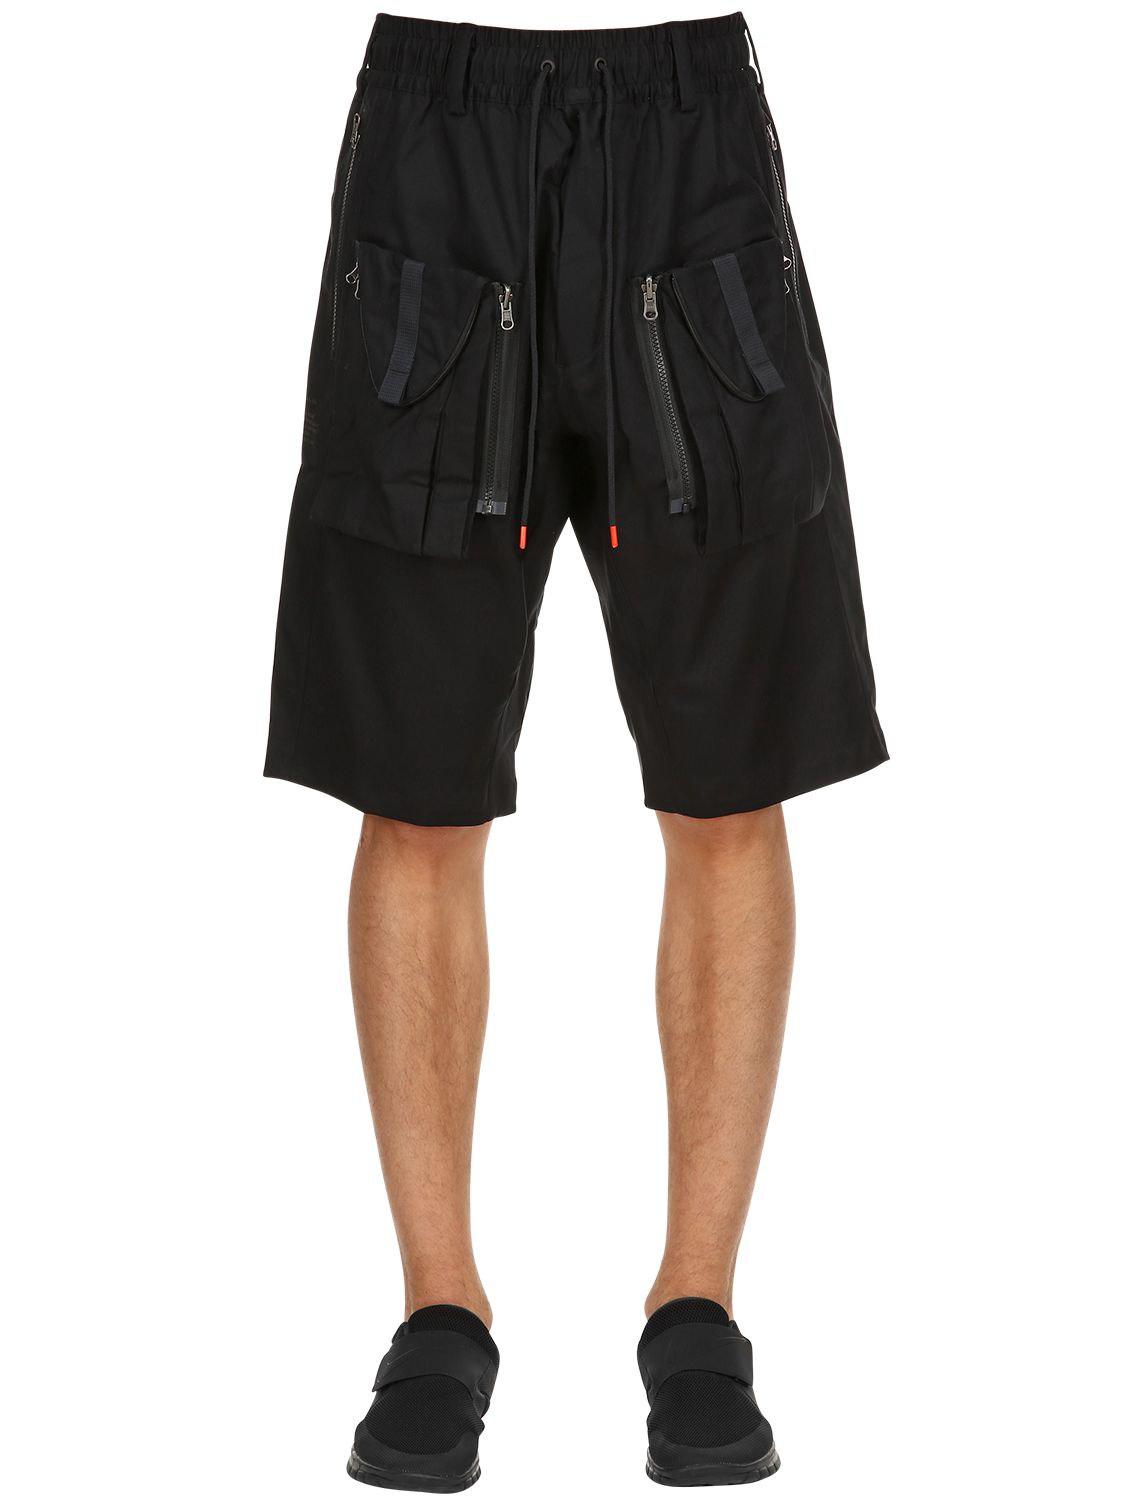 Nike Nikelab Acg Cargo Shorts in Black for Men - Lyst